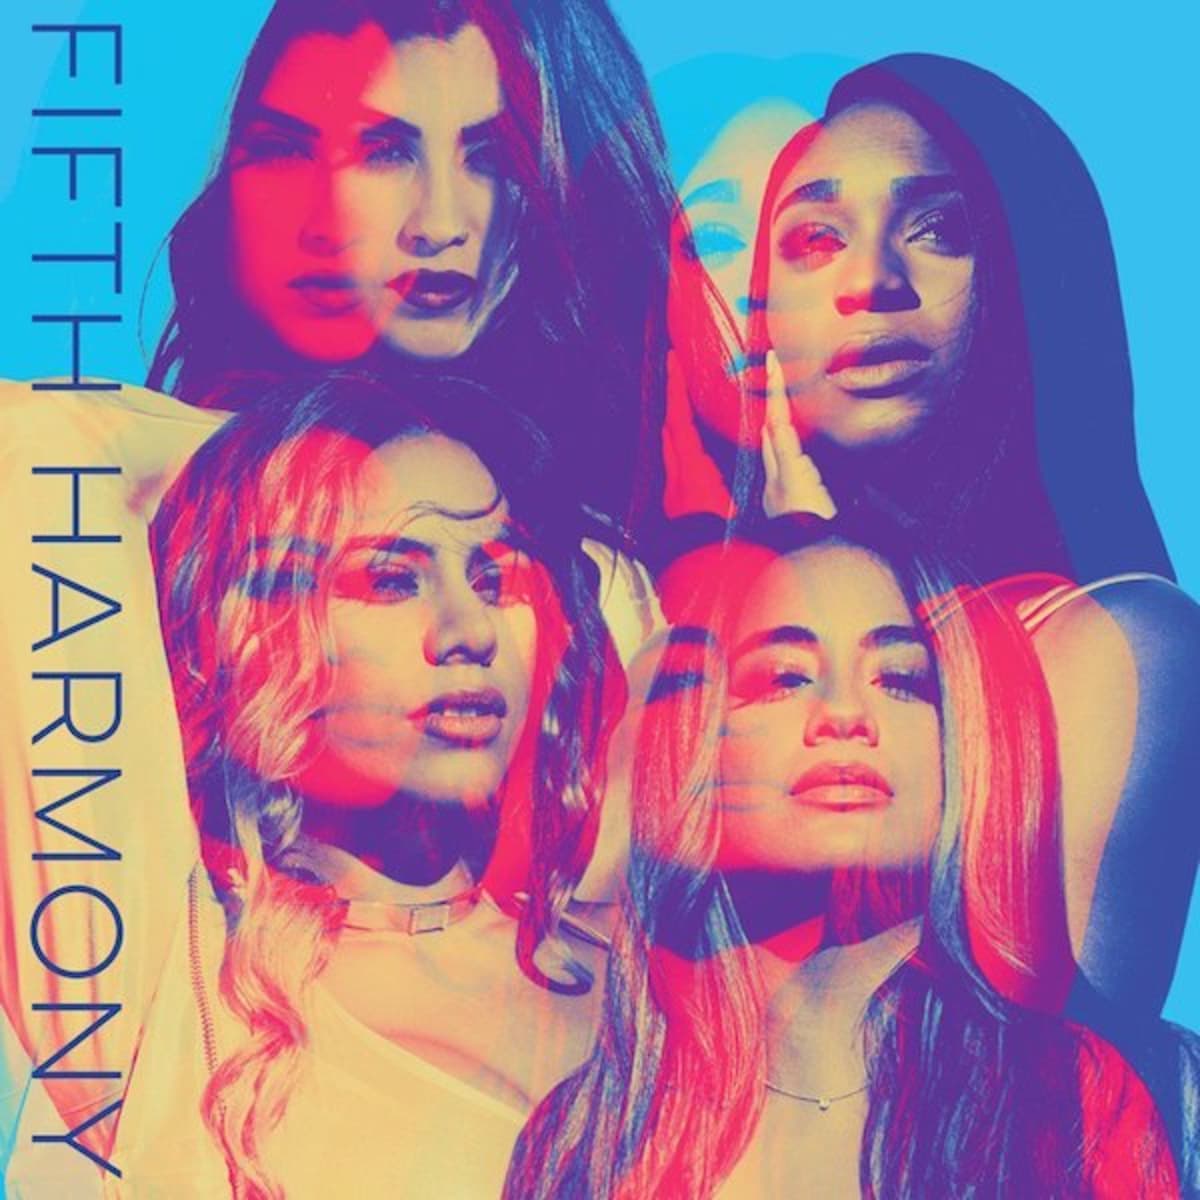 Fifth Harmony - Fifth Harmony (album artwork cover)